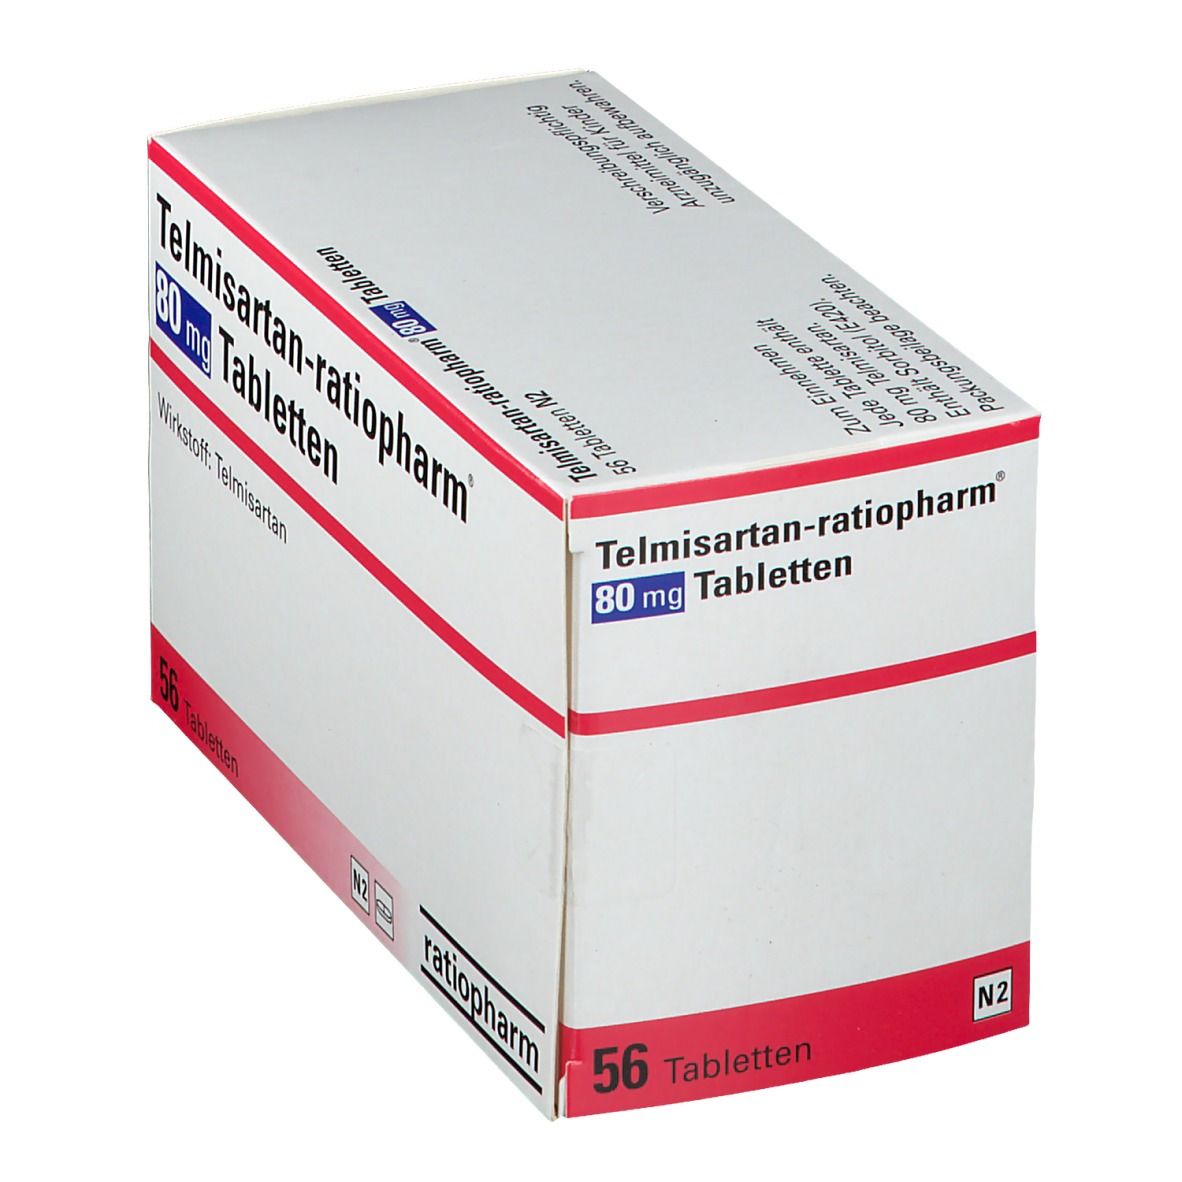 Telmisartan-ratiopharm® 80 mg